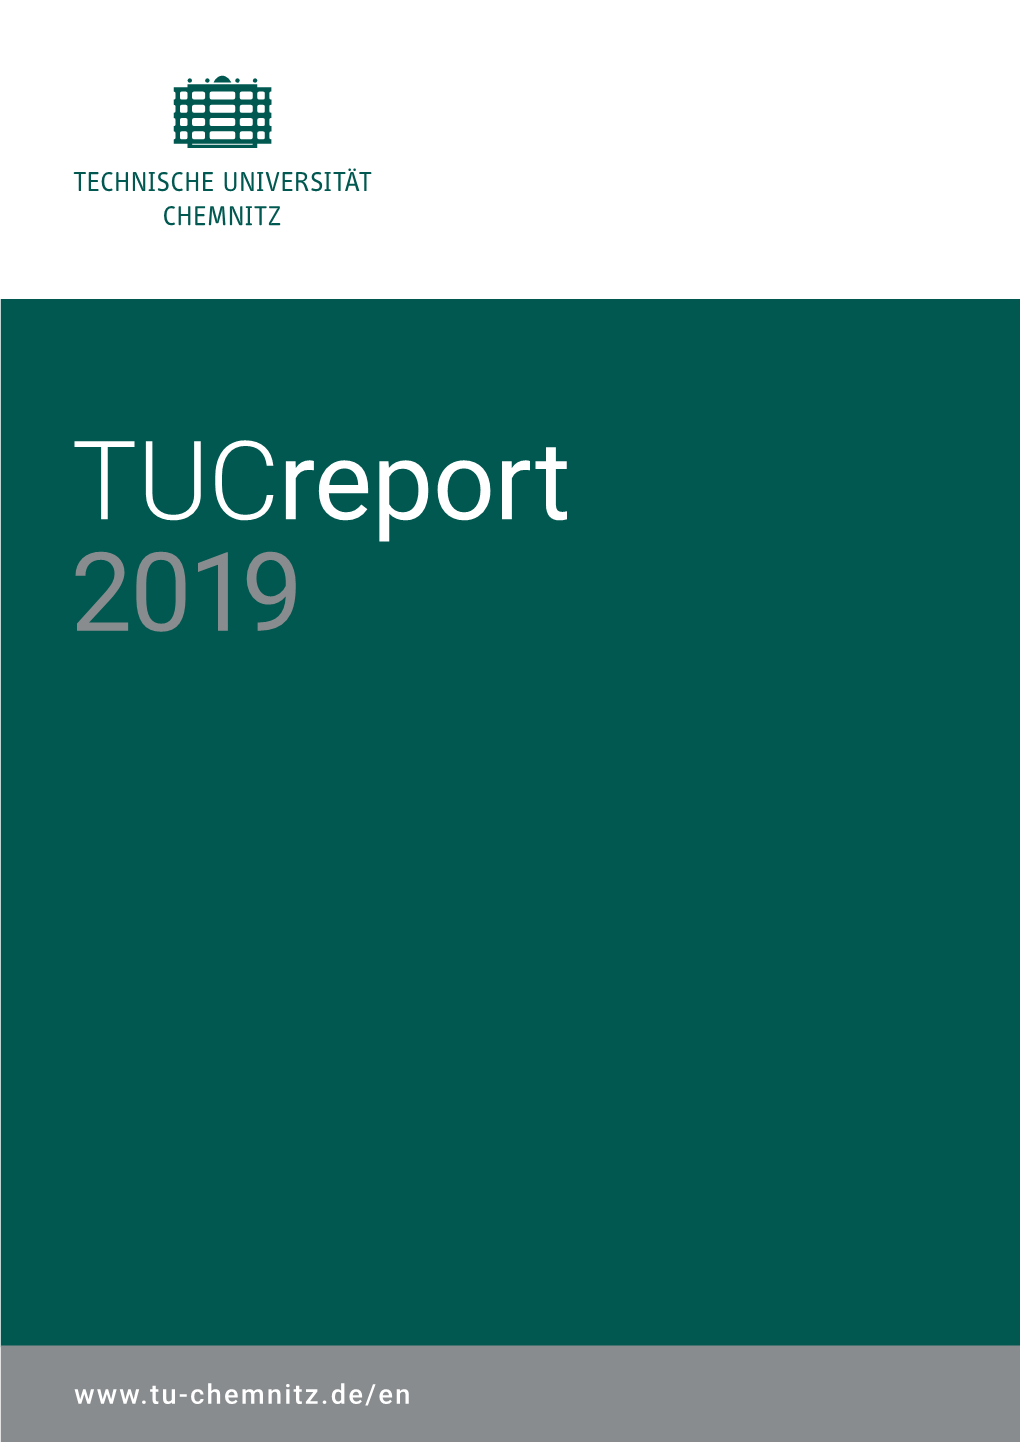 Tucreport 2019